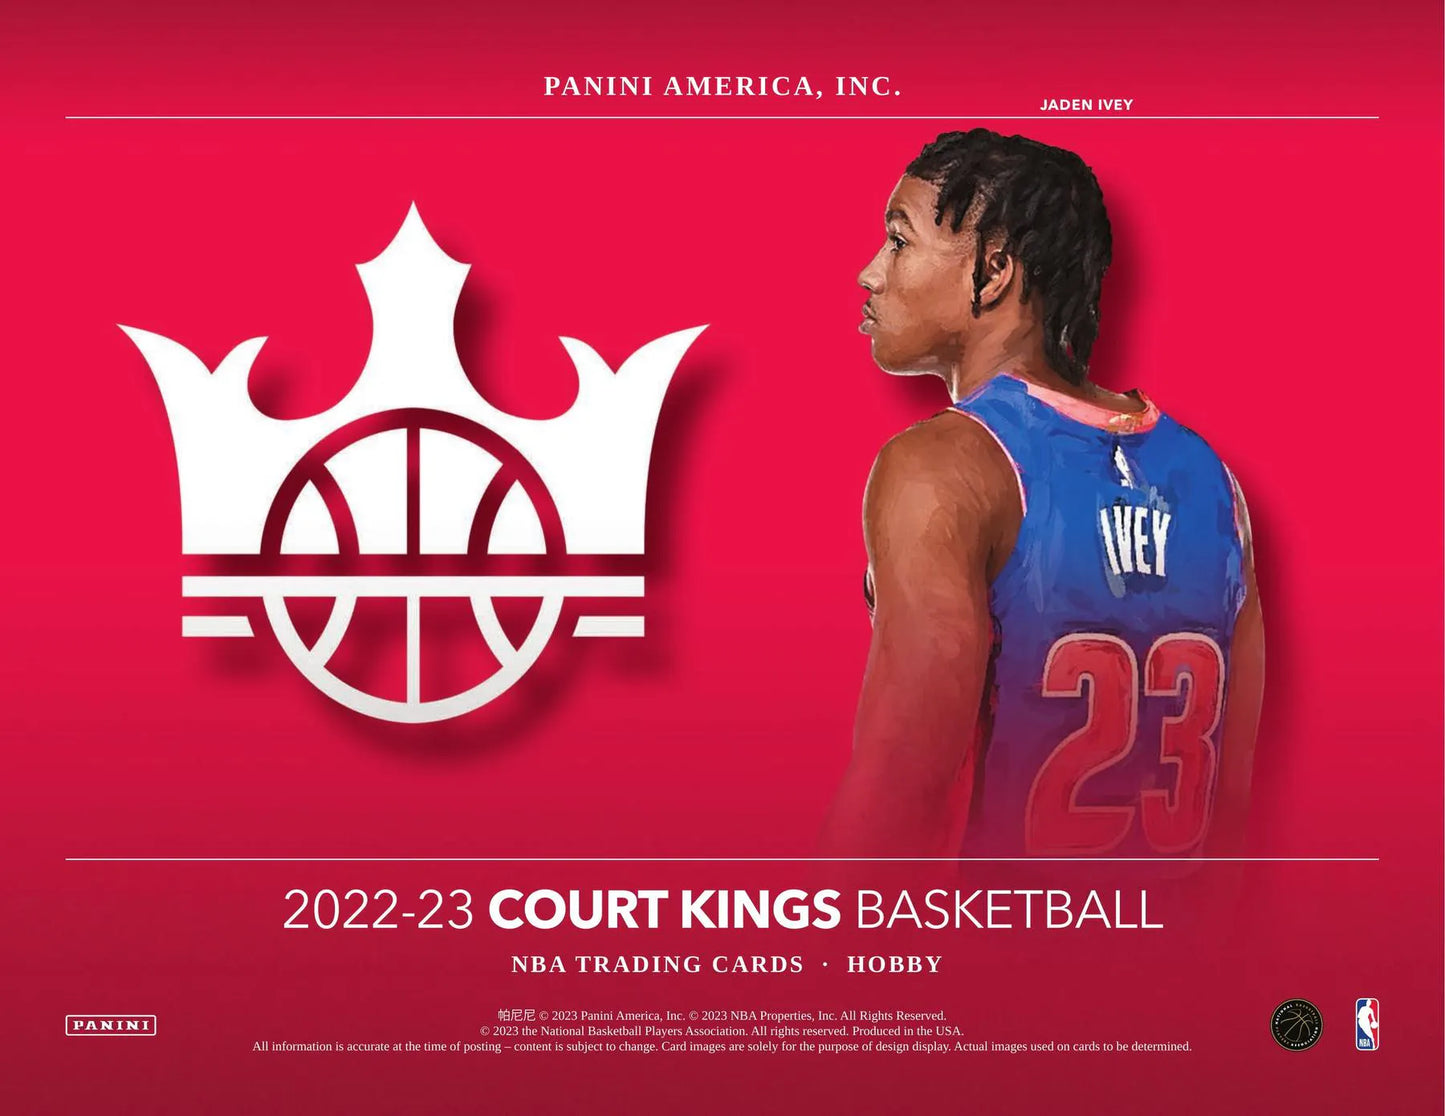 2022/23 Panini Court Kings Basketball Hobby Box